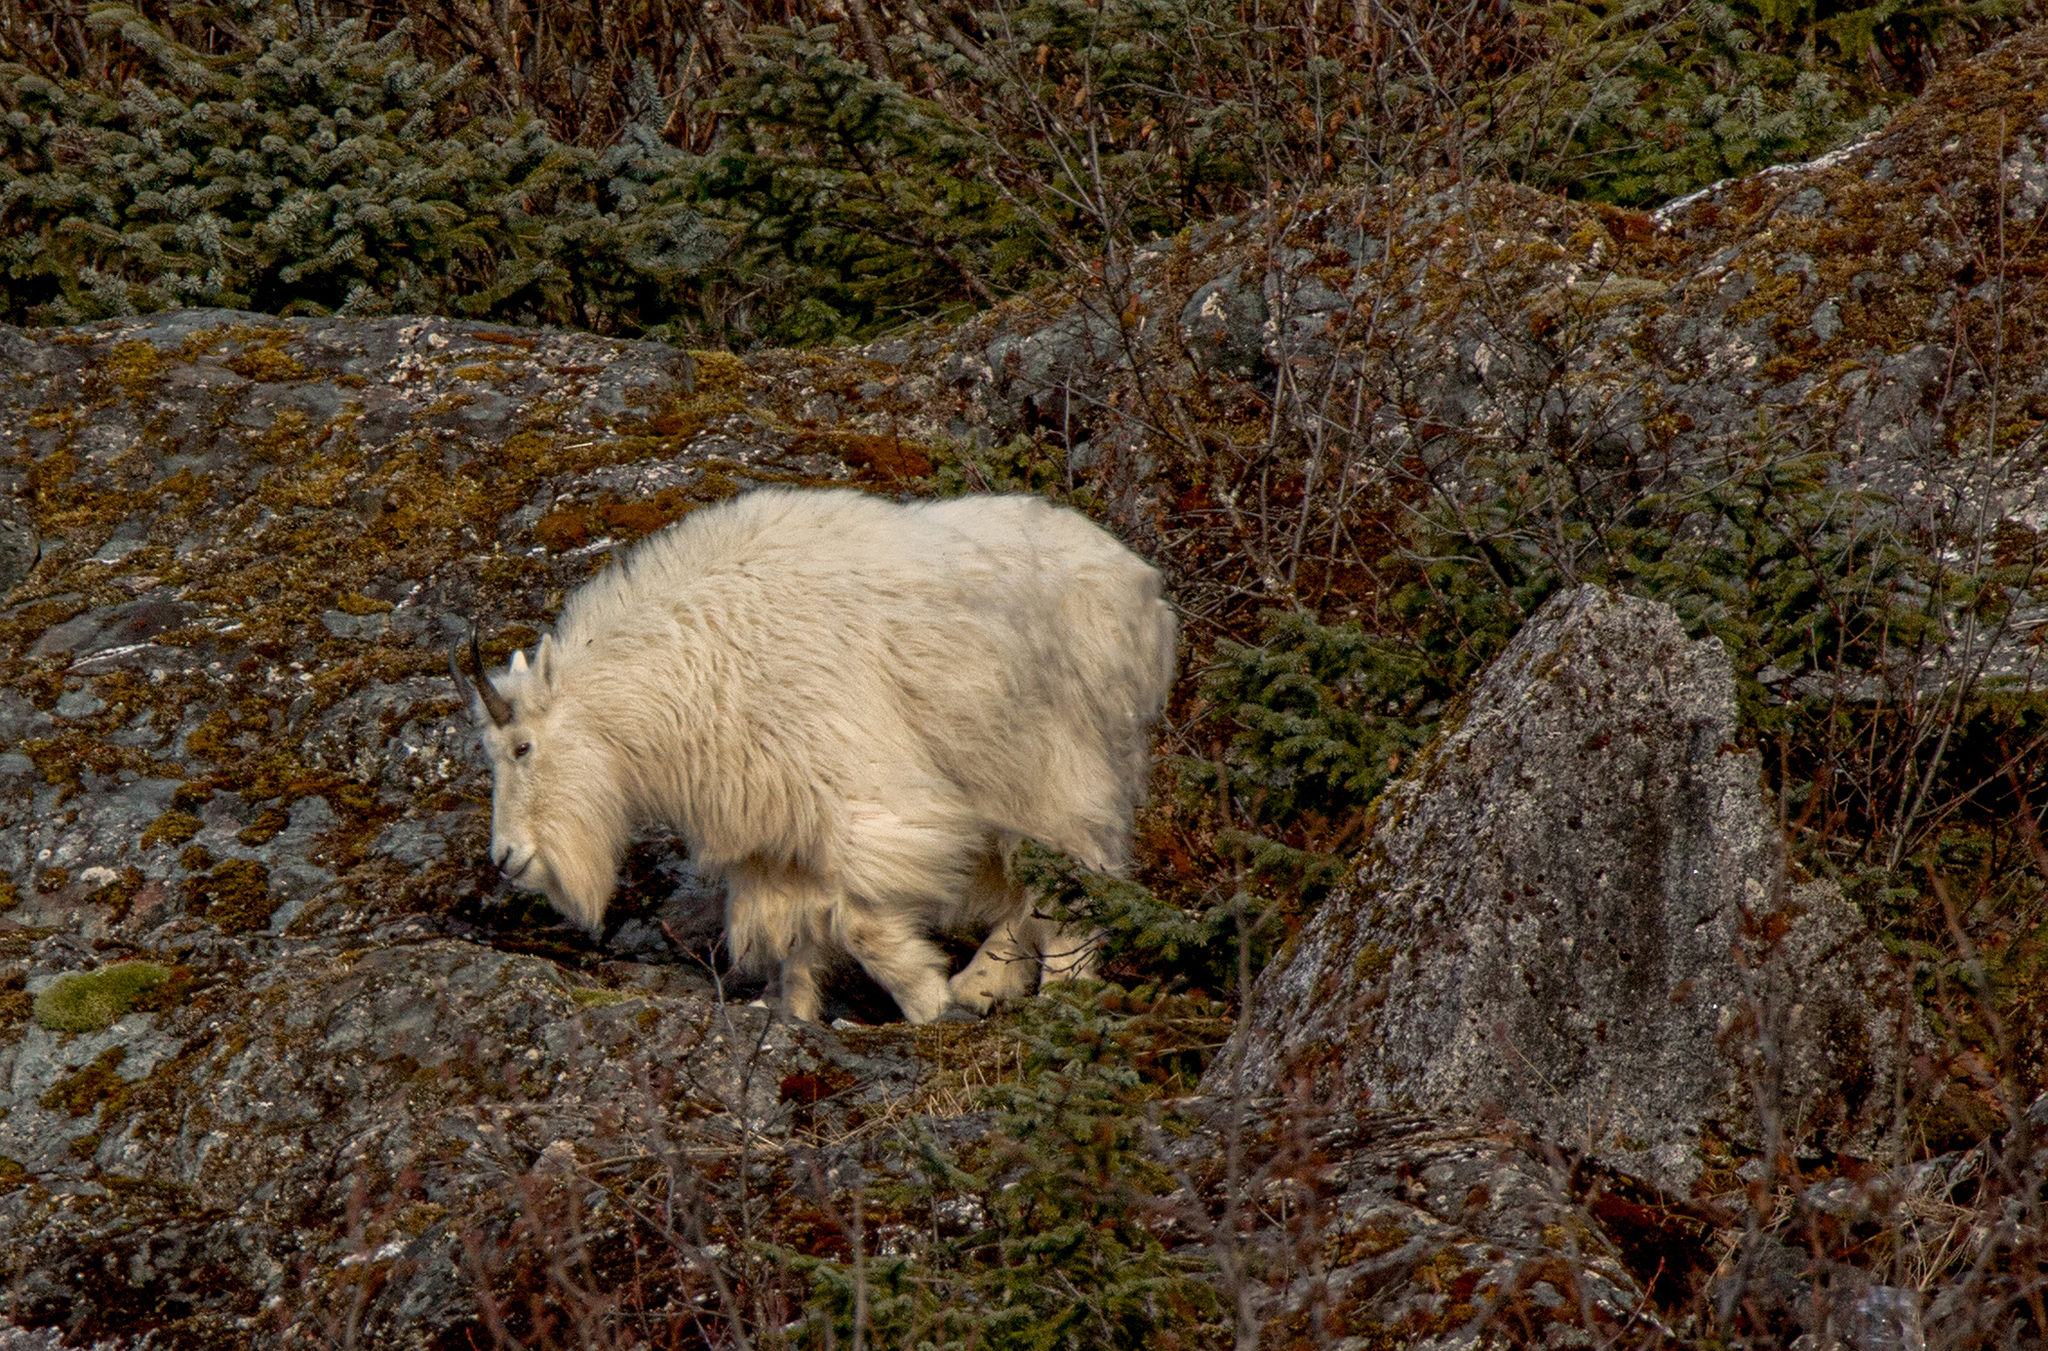 Mountain Goat enjoying the sun and feeding on moss. (Photo by Janice Gorle)